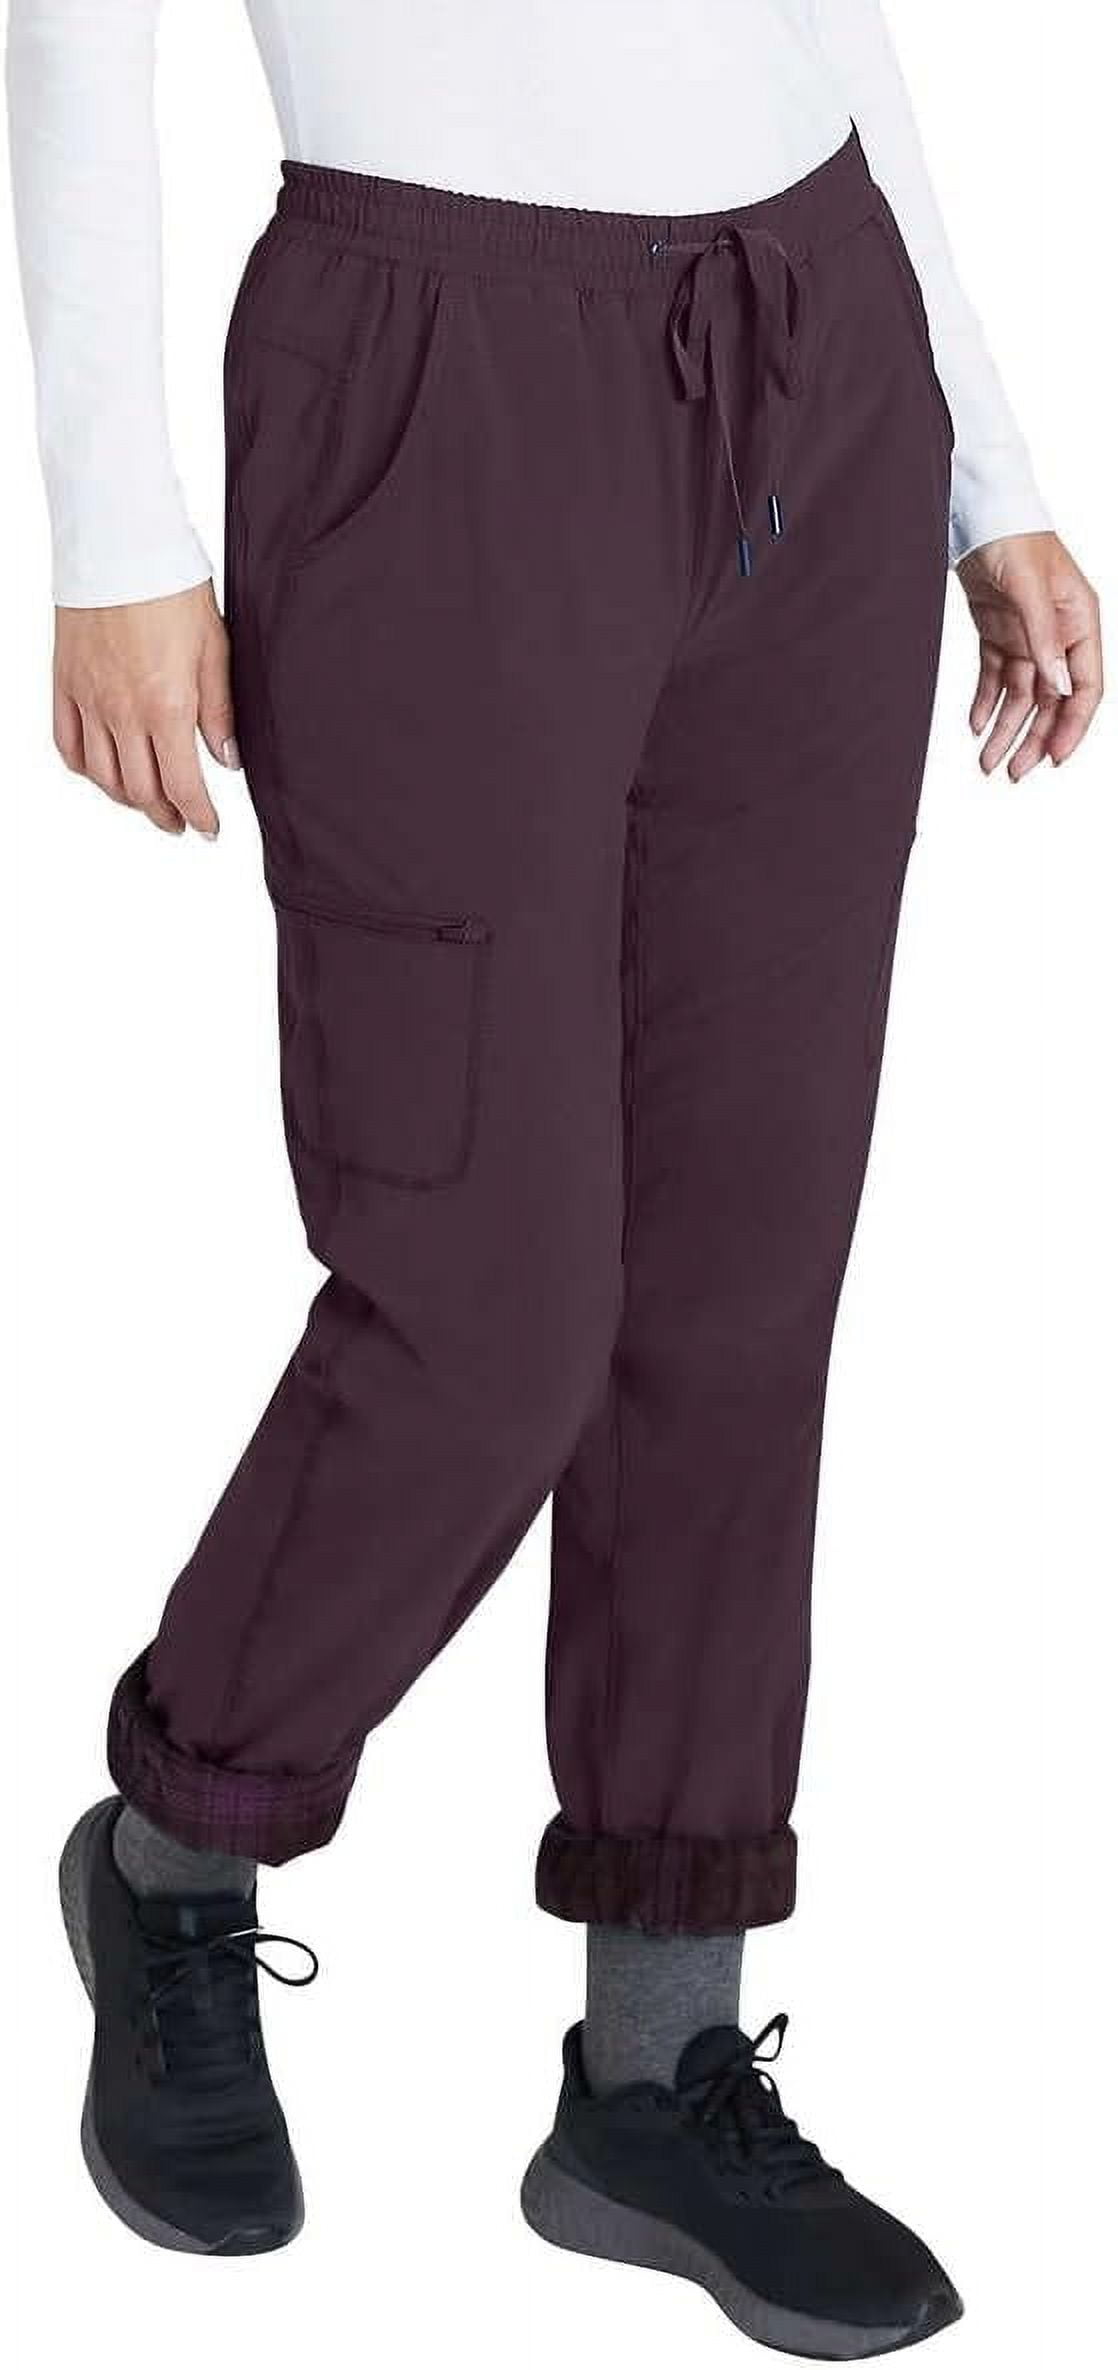 Women's Kuhl Pants: Skadi Fleece Lined | Pants, Lined, Bottoms pants